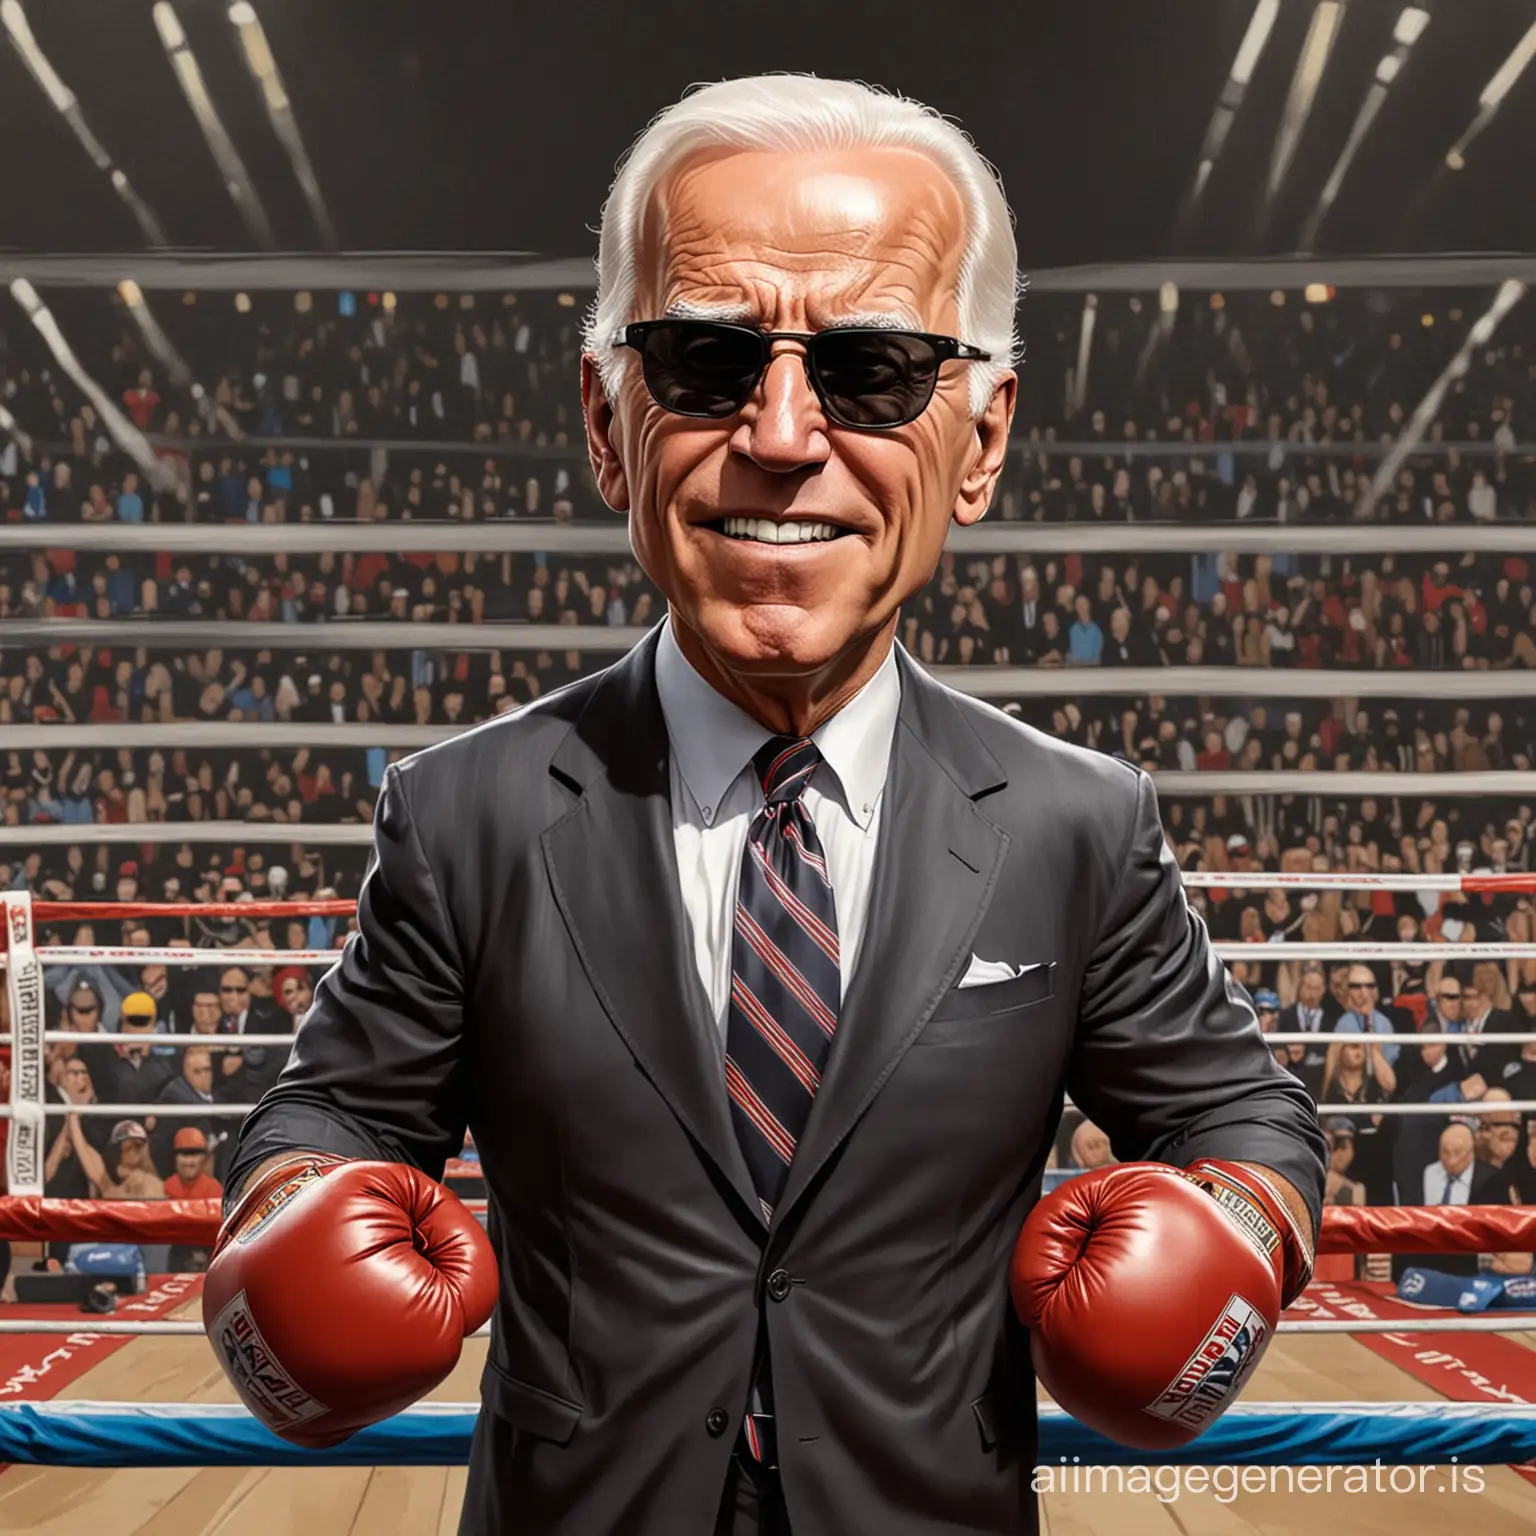 Joe-Biden-Cartoon-Caricature-in-Boxing-Ring